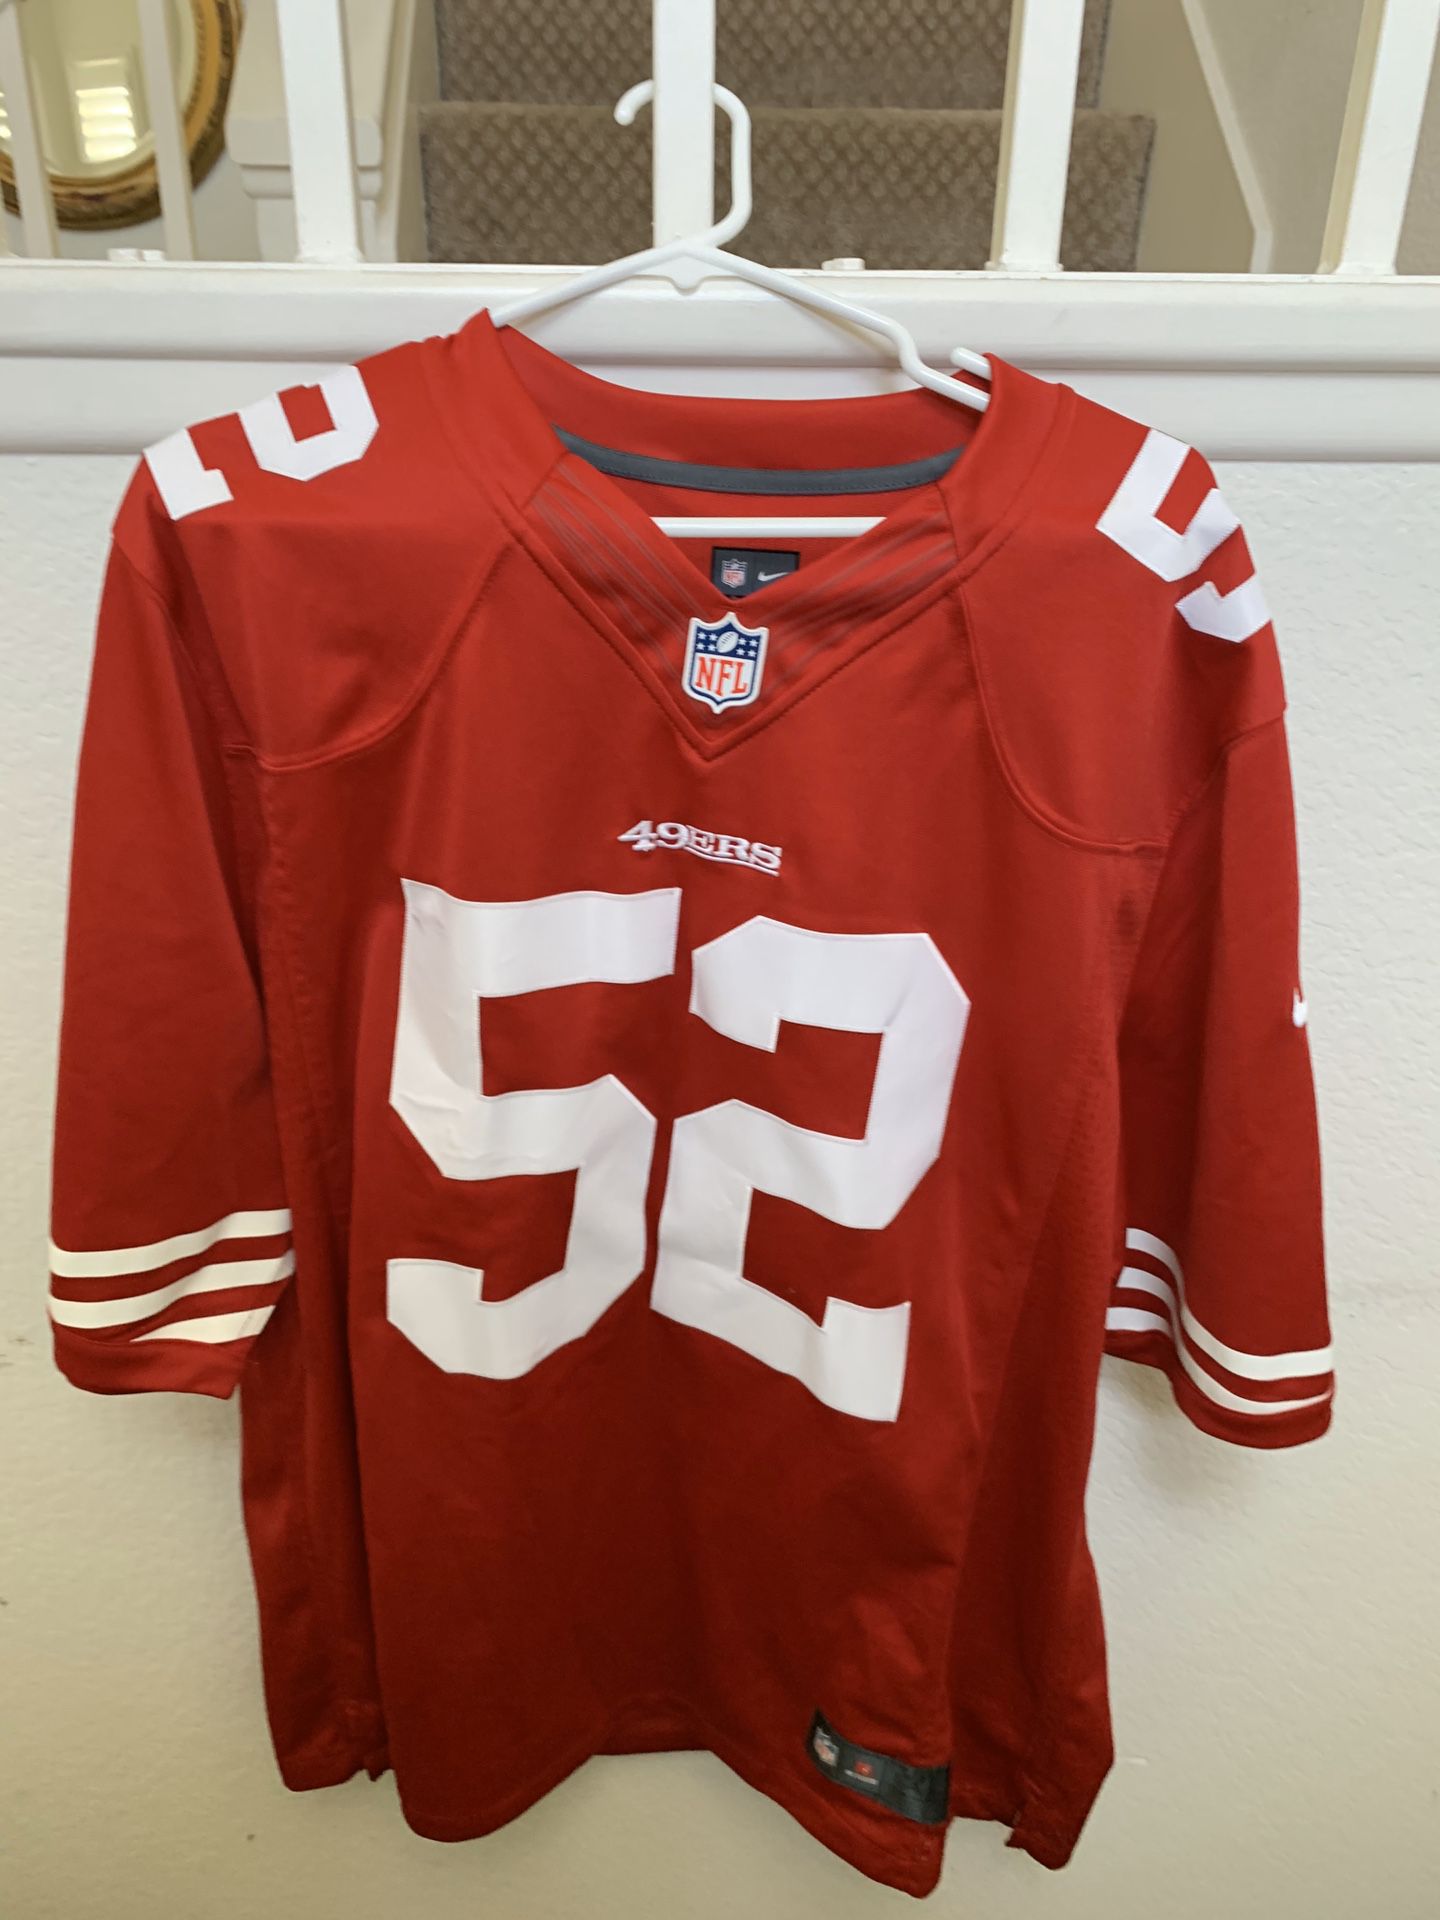 49ers patrick willis jersey